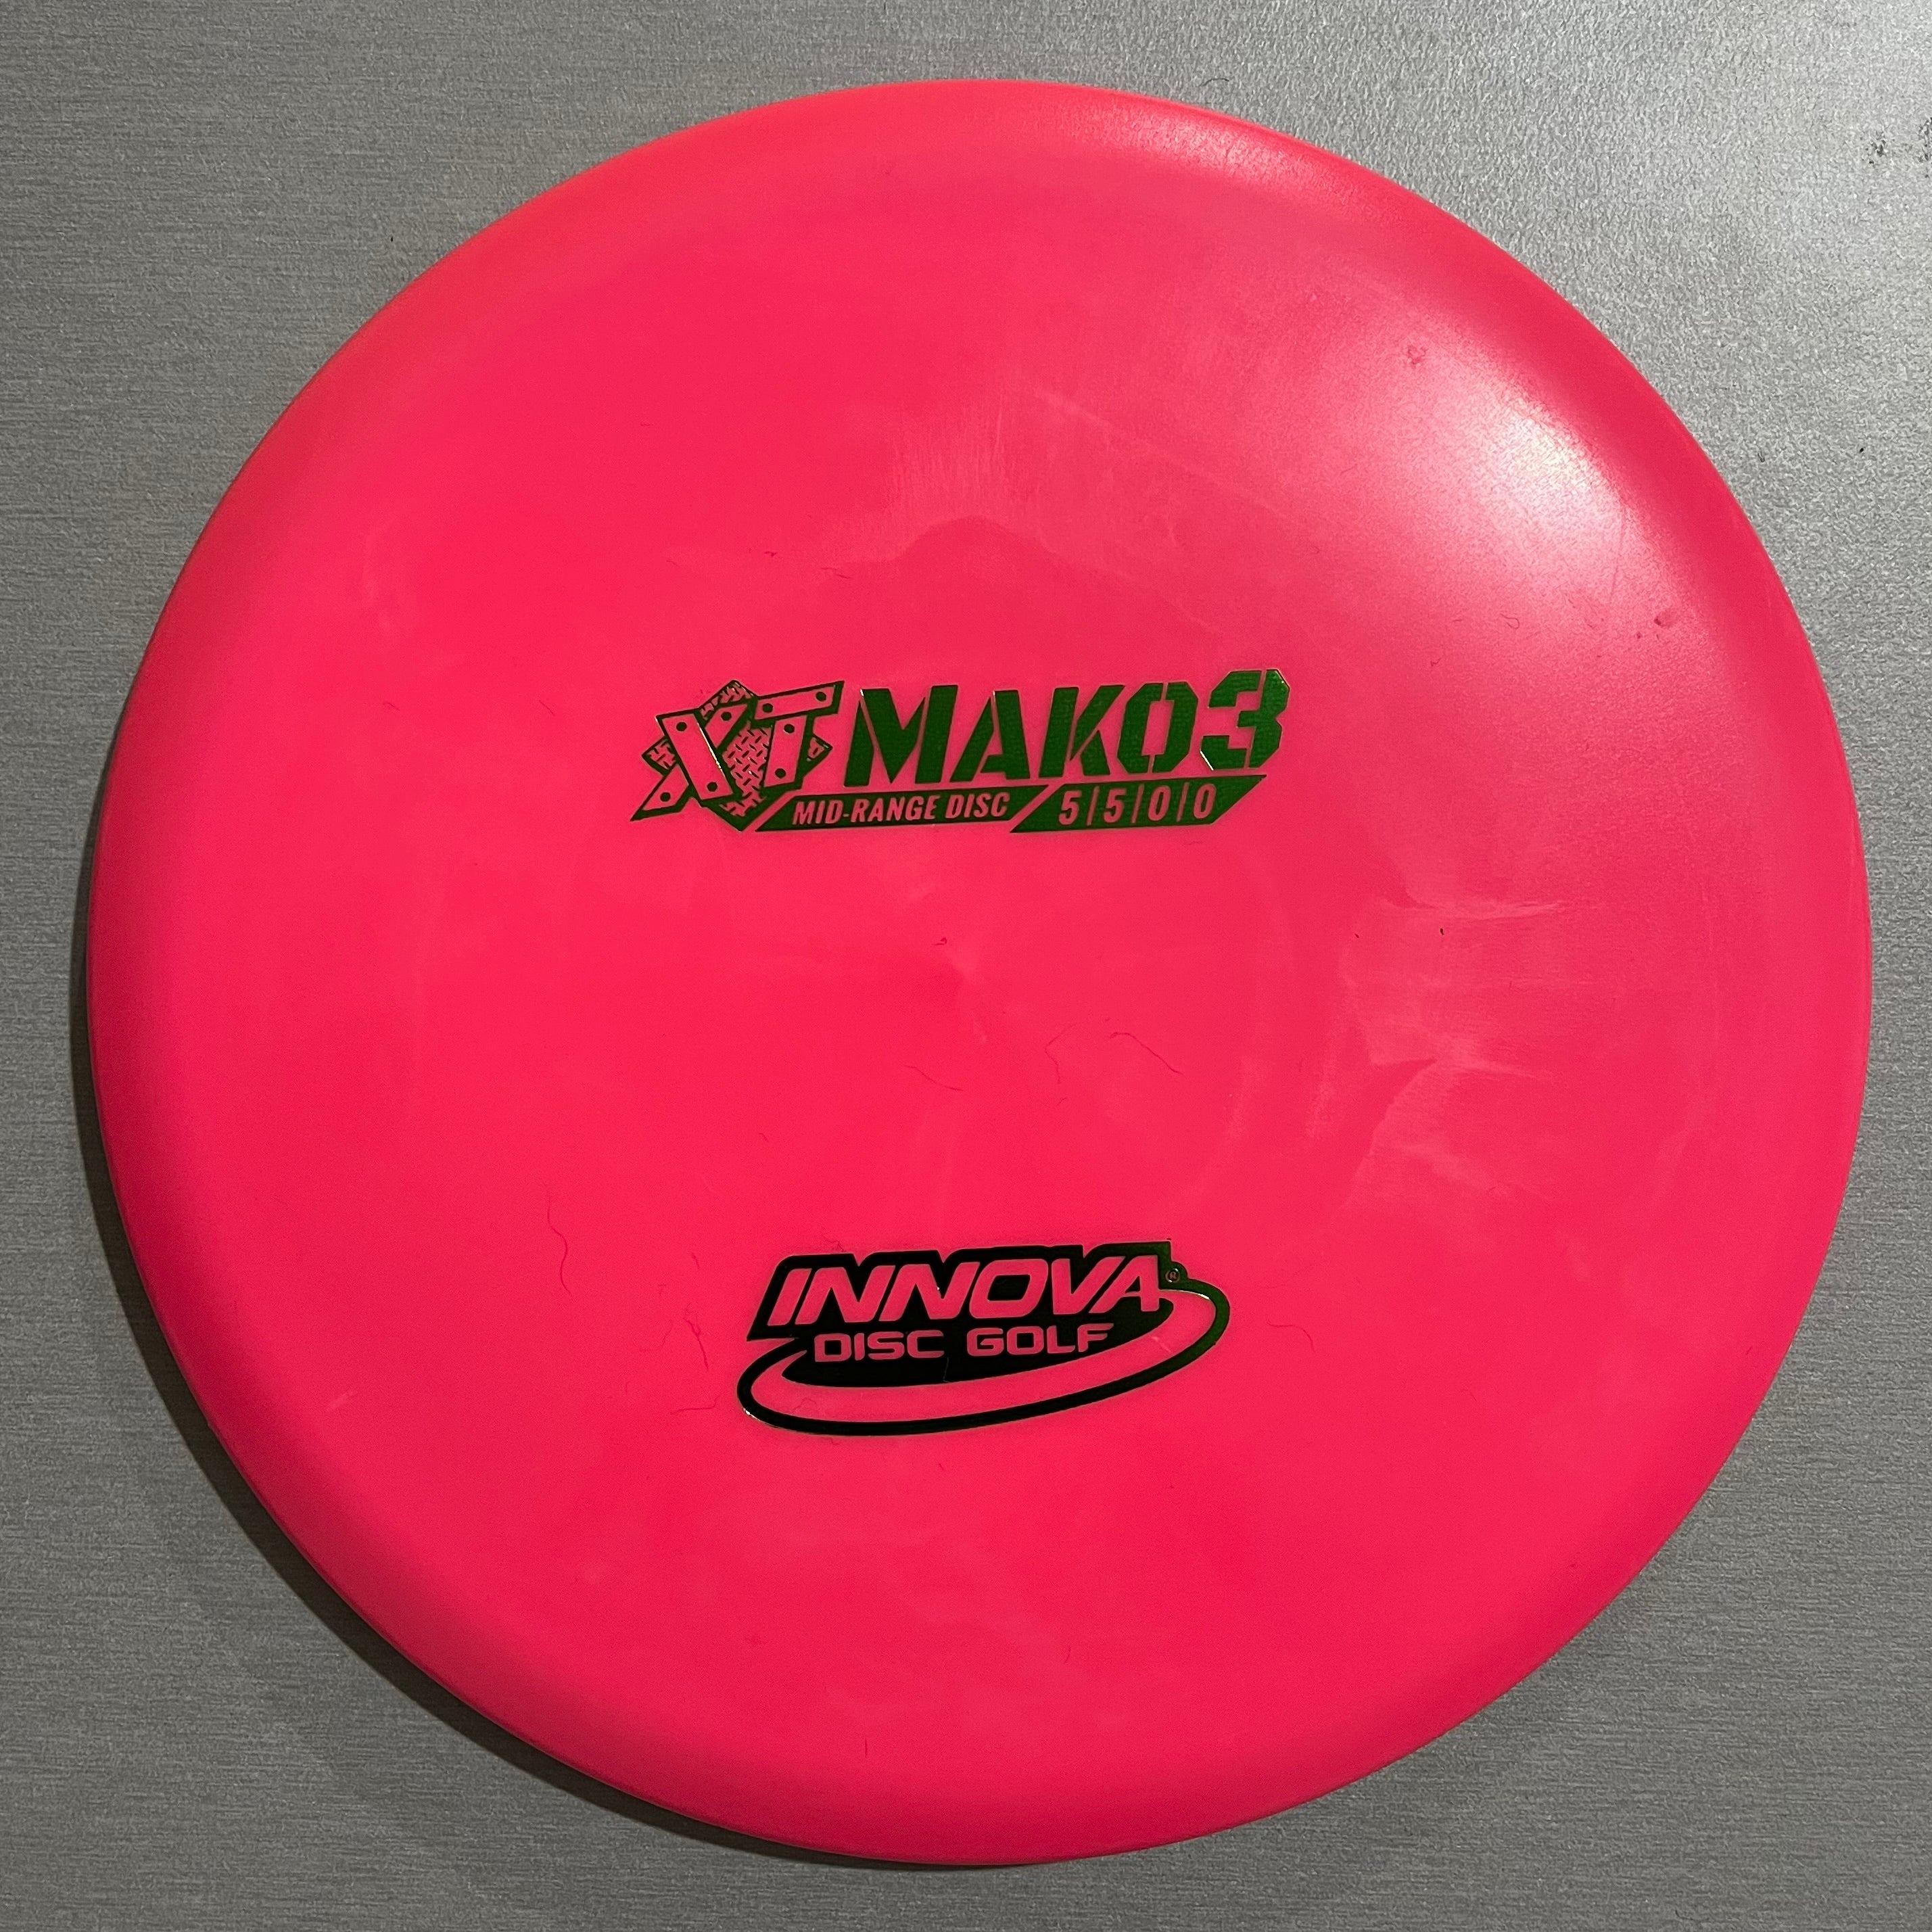 Innova Mako 3 XT - Mid Range Disc - Sportinglife Turangi 